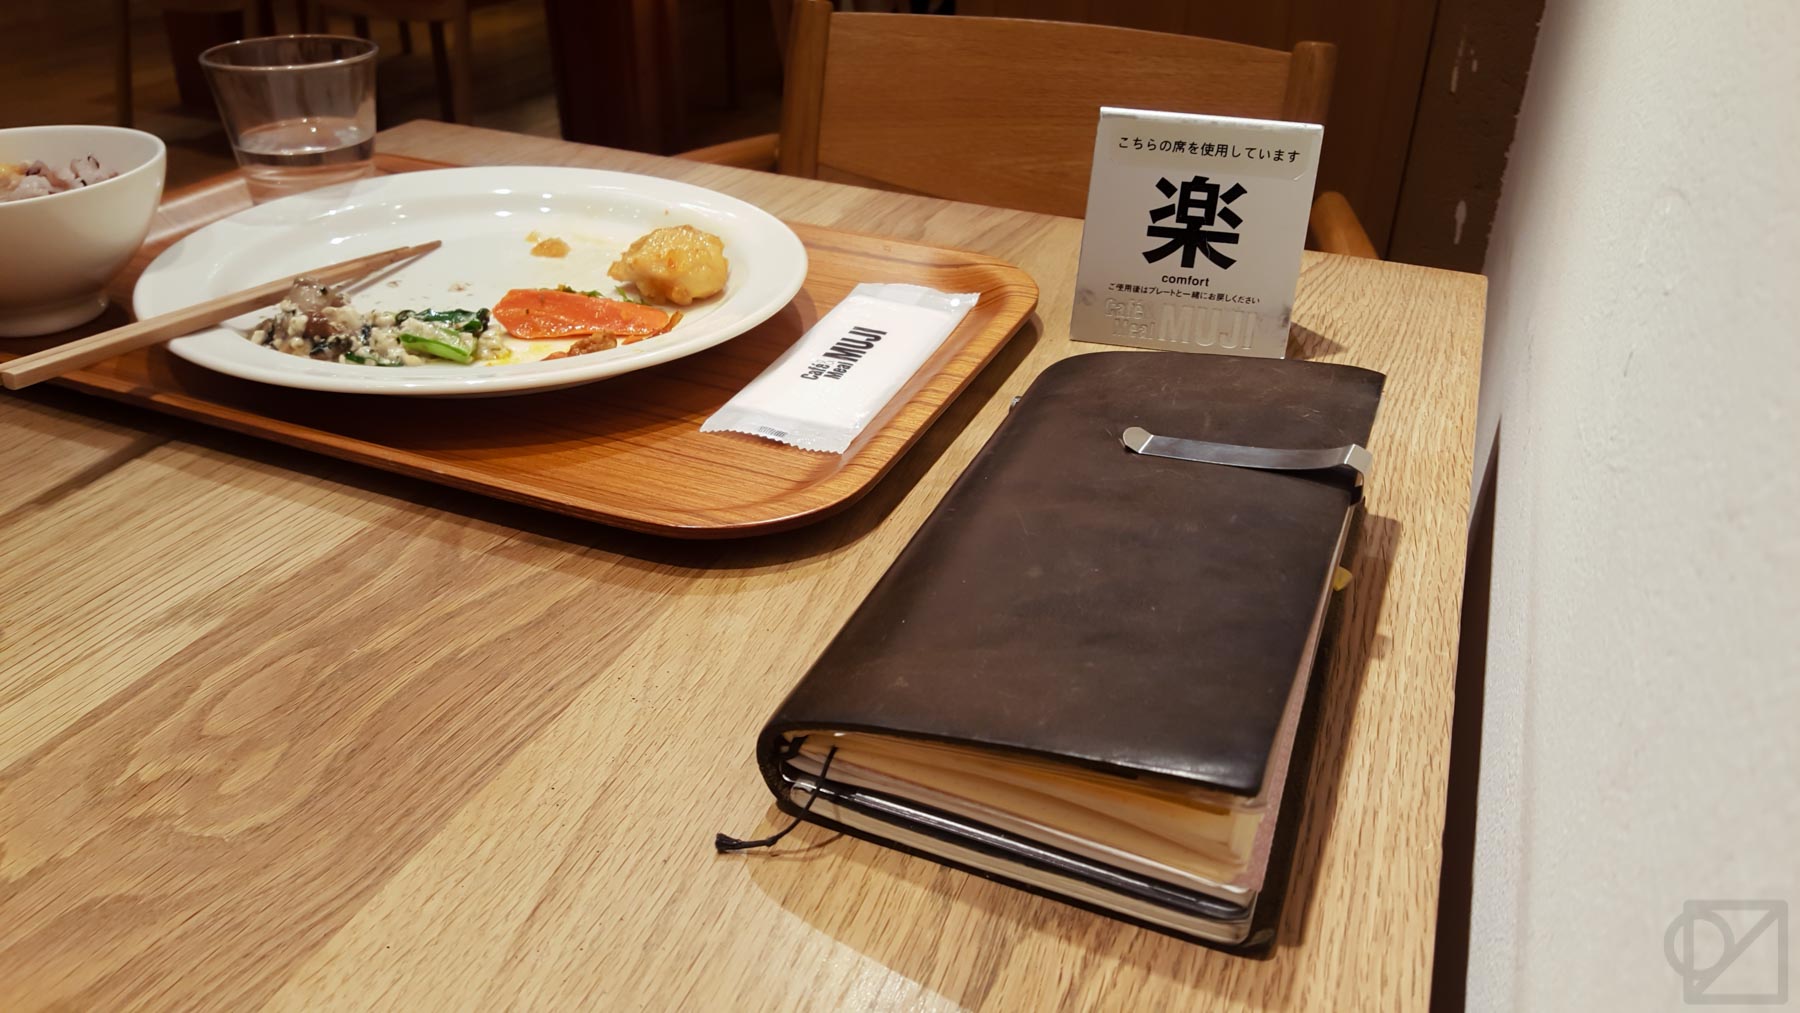 Dinner on the first night at a Shinjuku MUJI Cafe